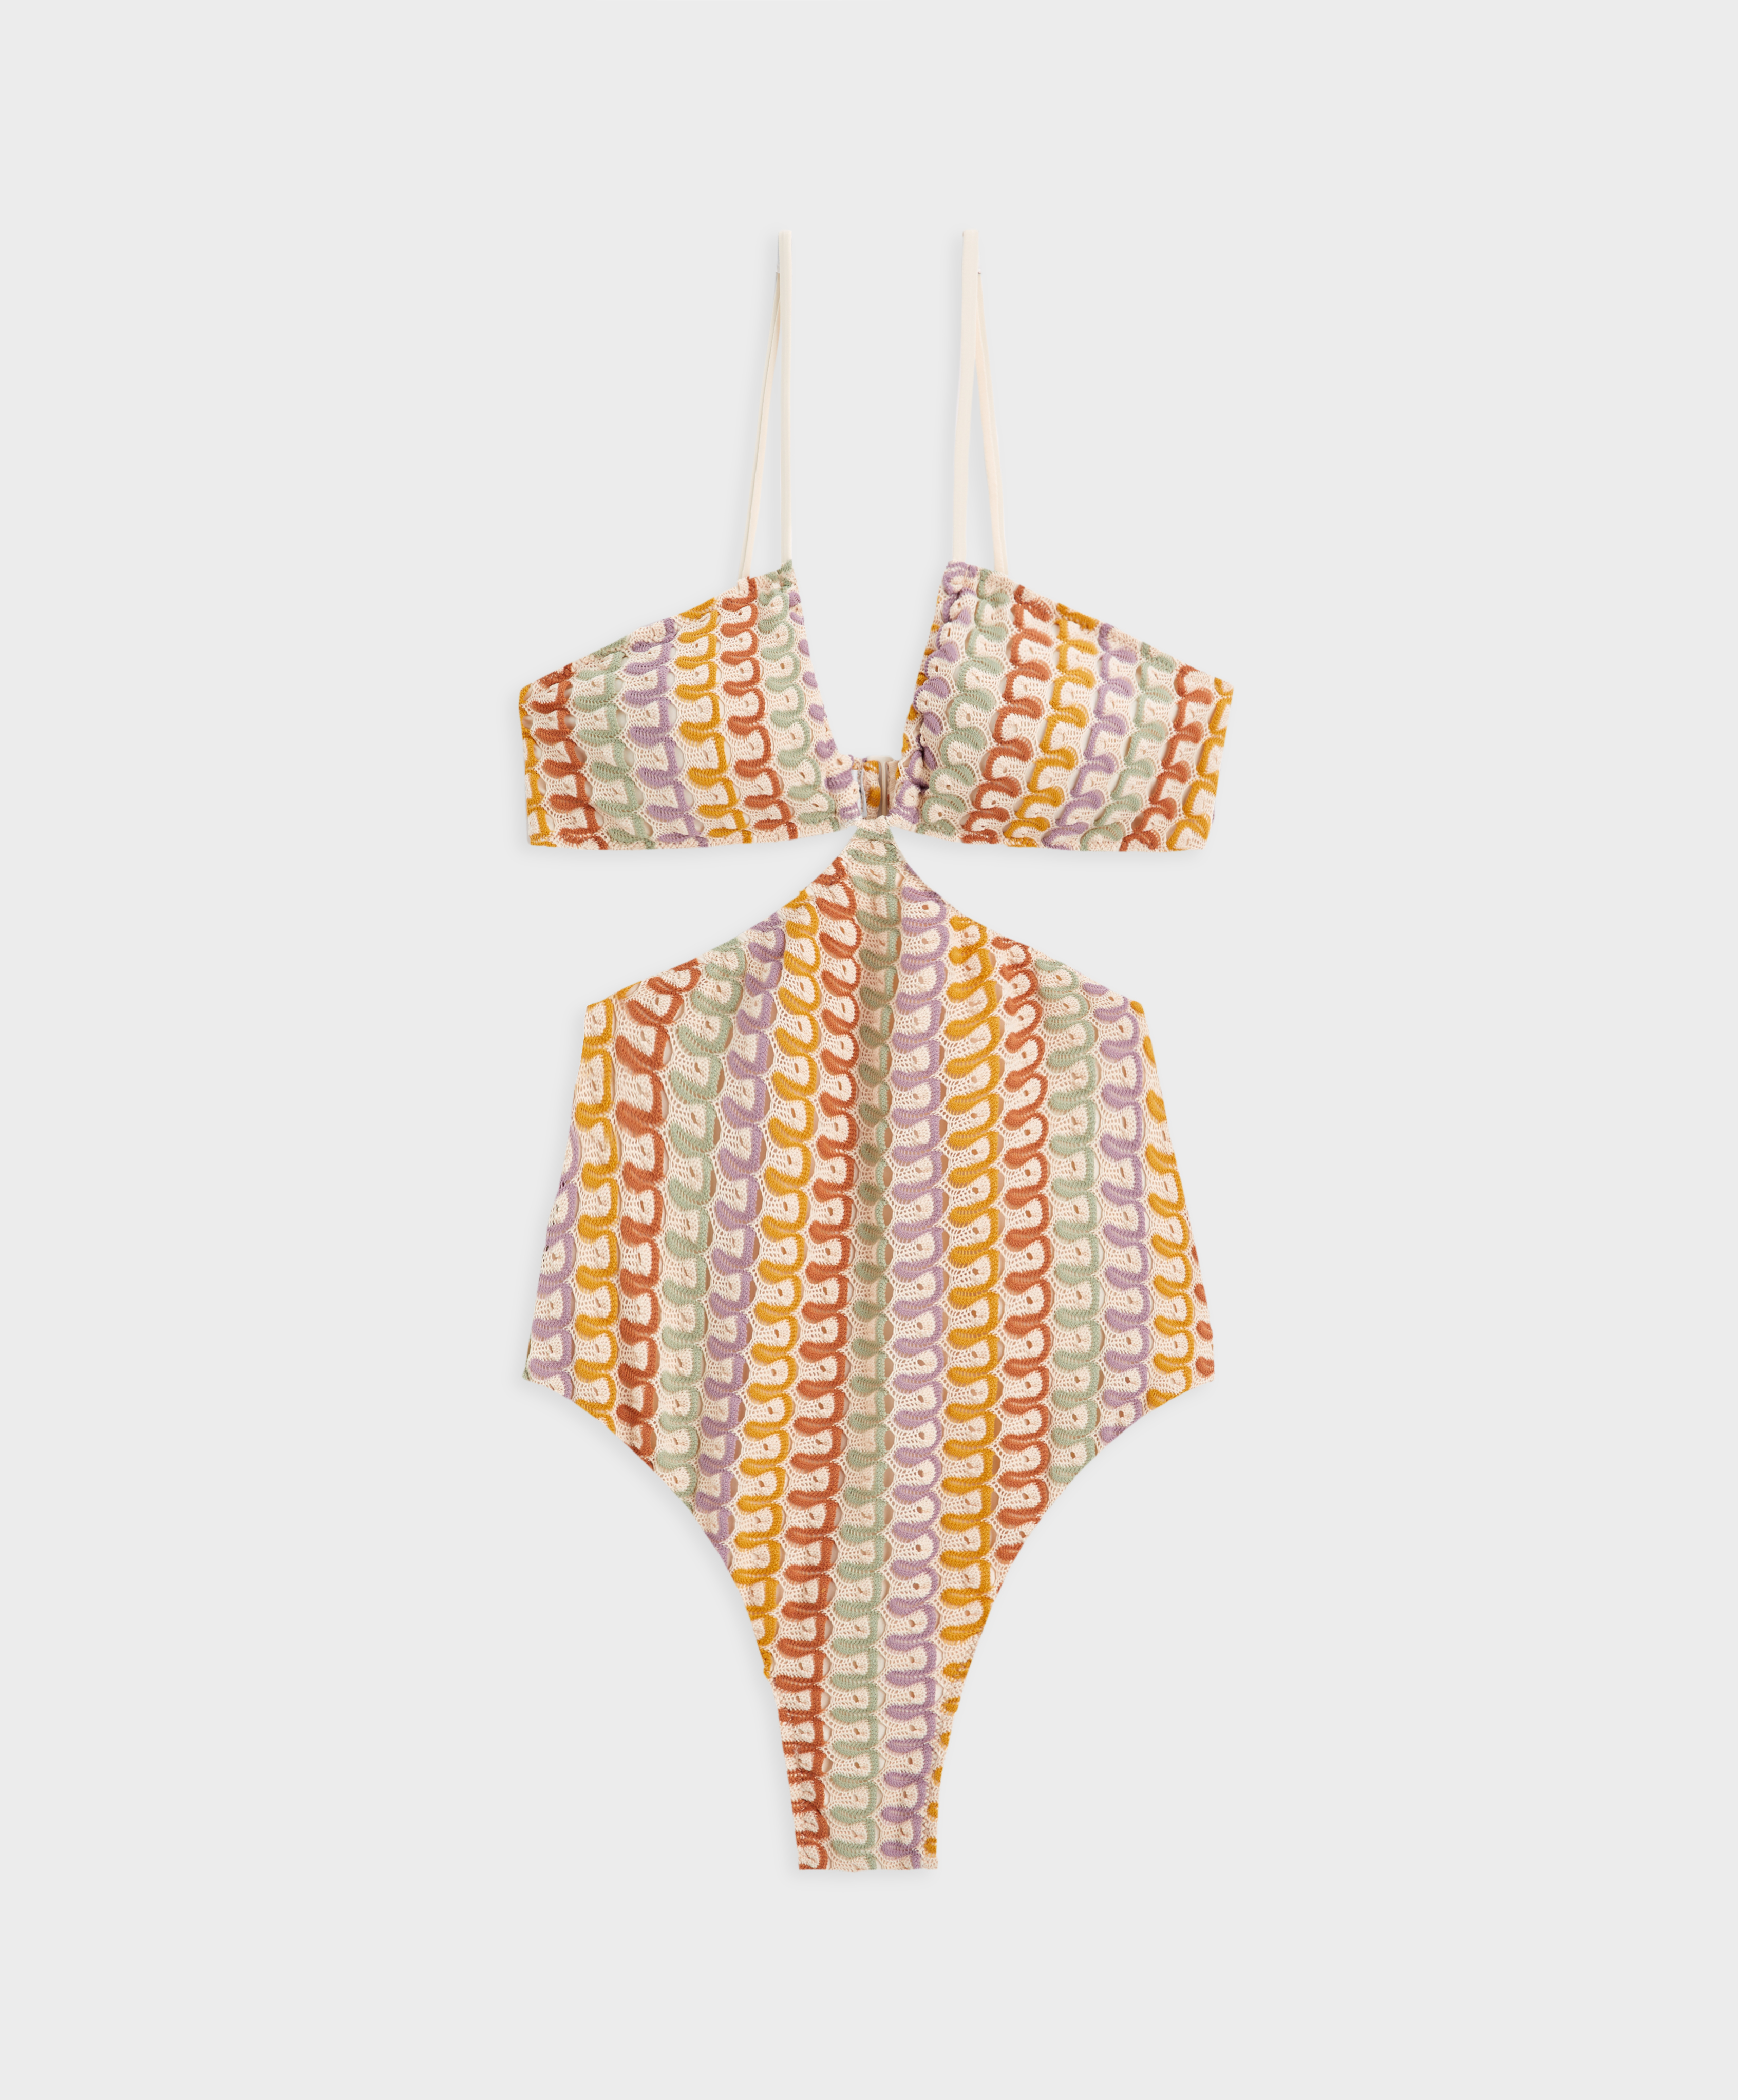 Bandeau-Badeanzug aus buntem Crochet